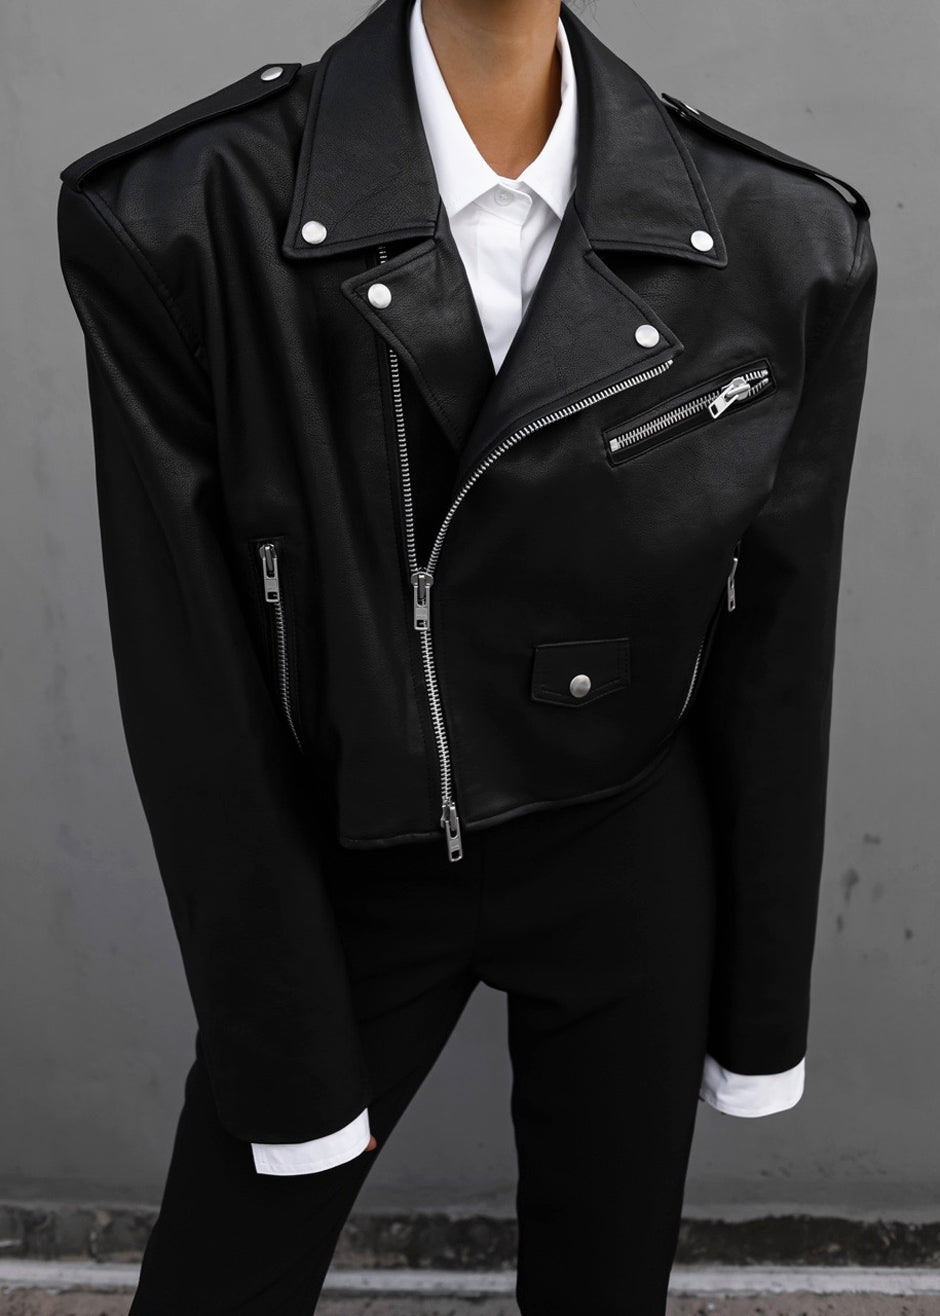 Infinity Women's Chic Cropped Leather Biker Jacket